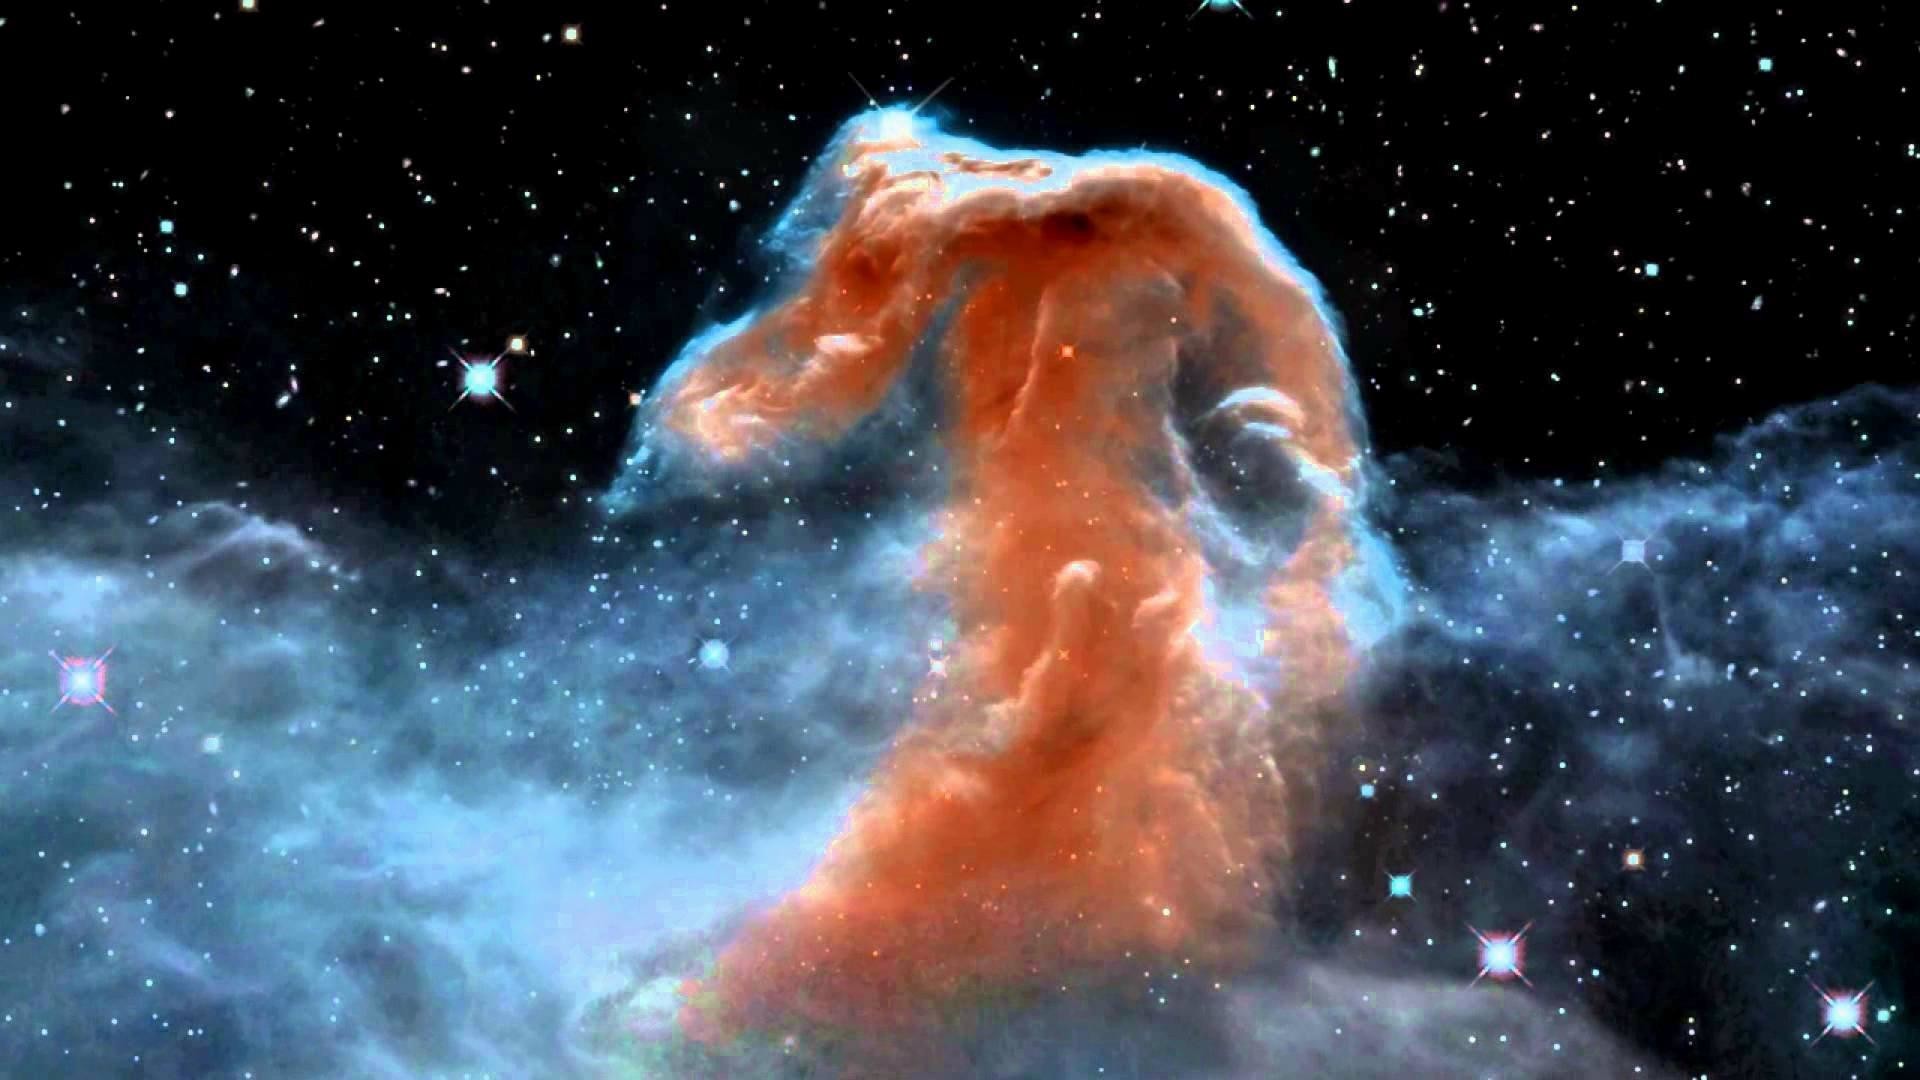 wallpaper.wiki-HD-Hubble-Images-1920×1080-PIC-WPD002229